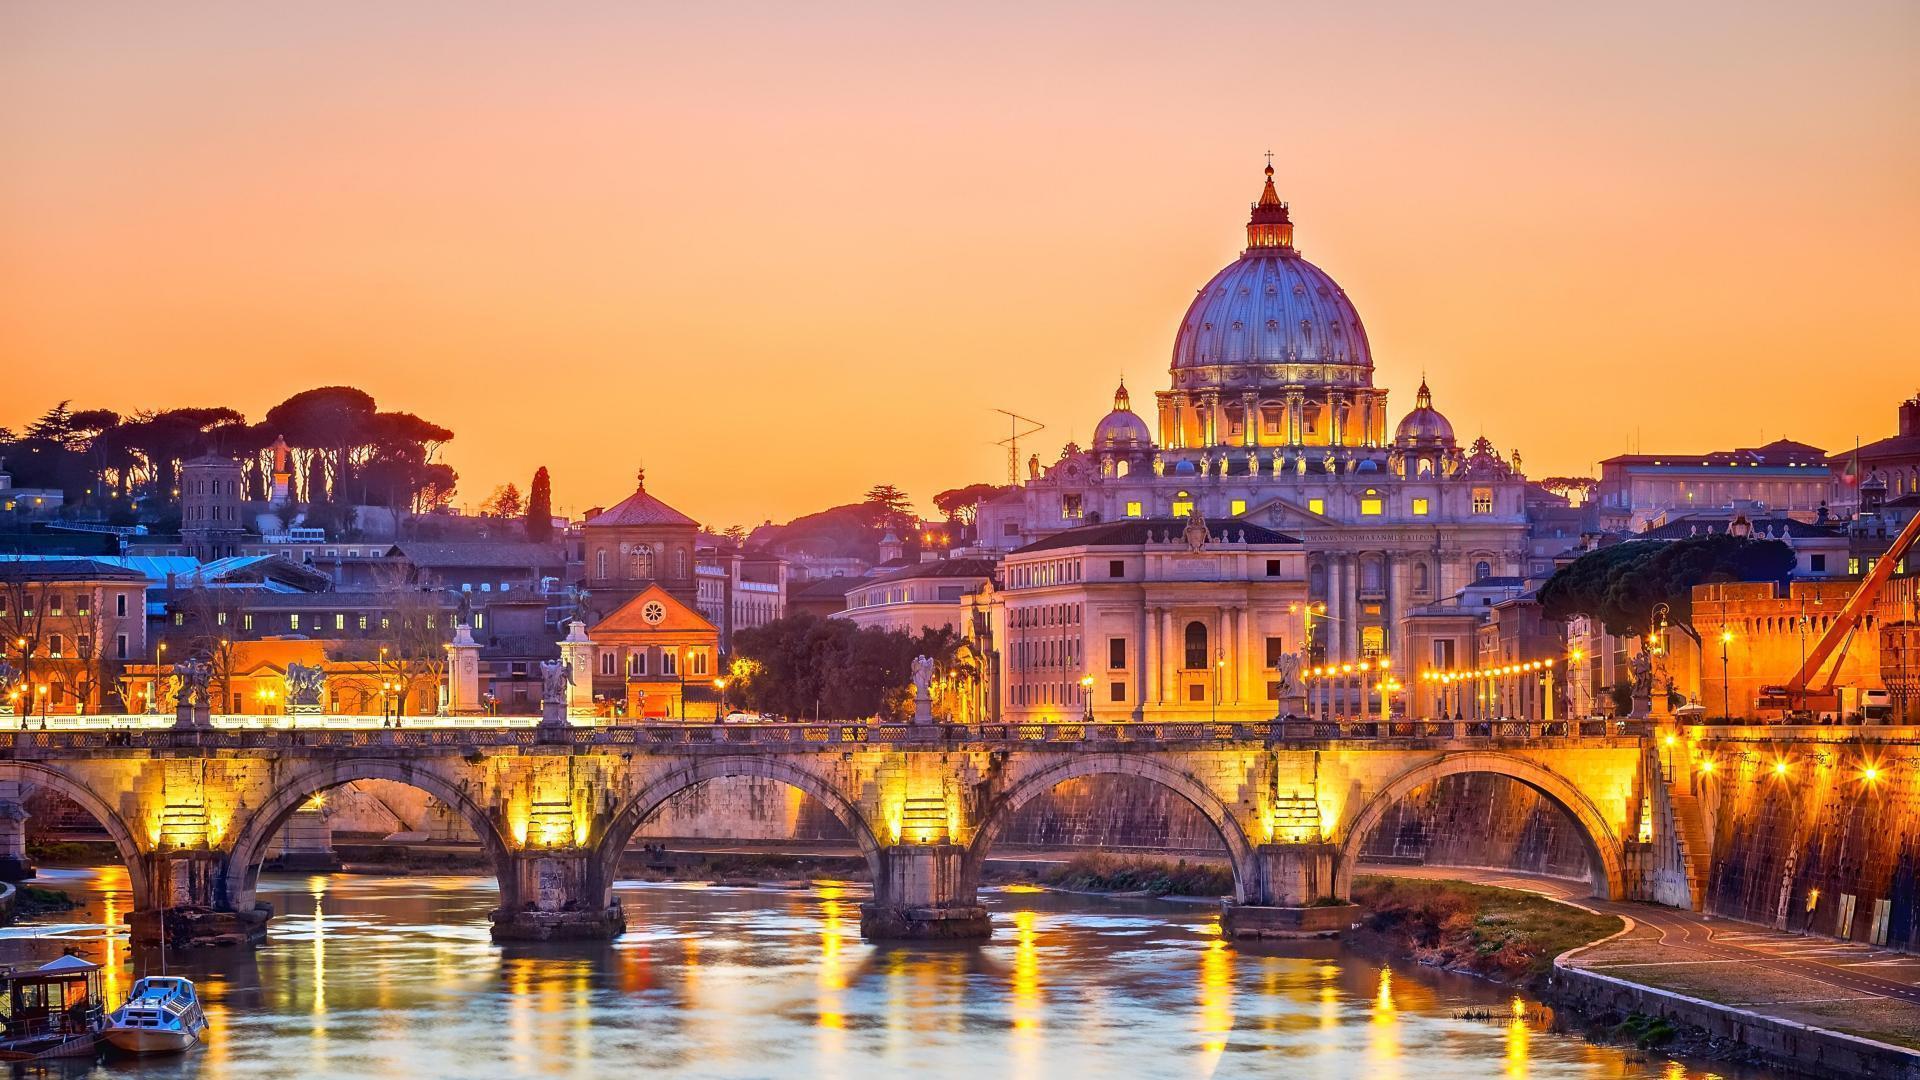 Rome - The Eternal City